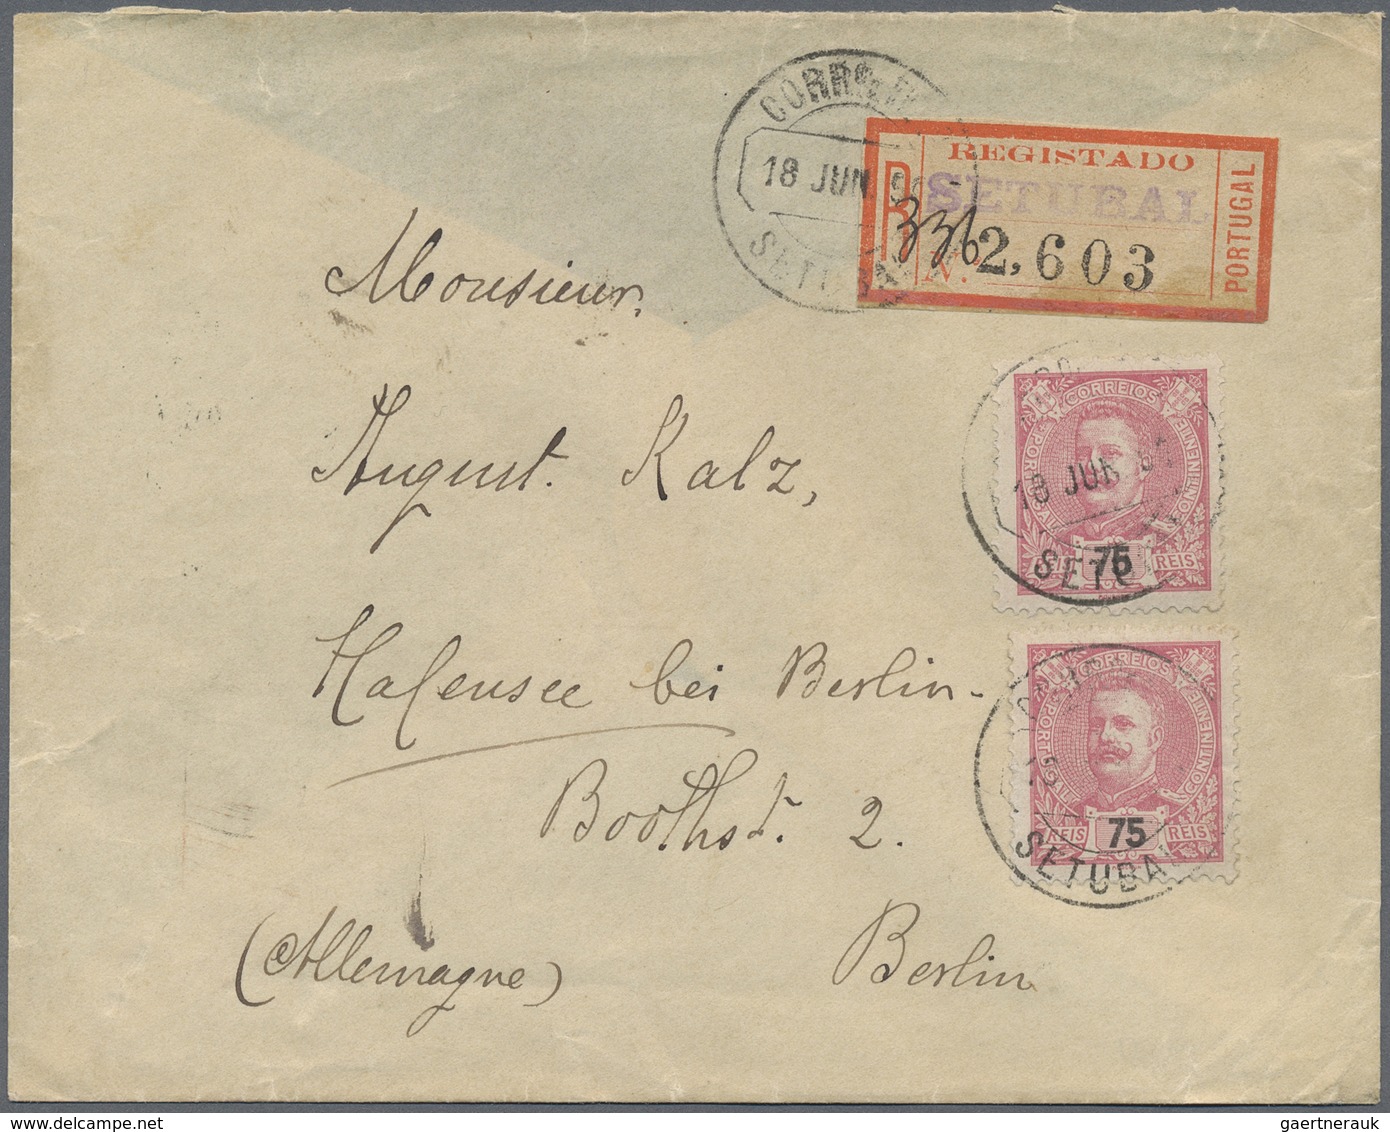 Br Portugal: 1820/1946: 21 envelopes and postal stationeries including pre-philatelic, registered and u